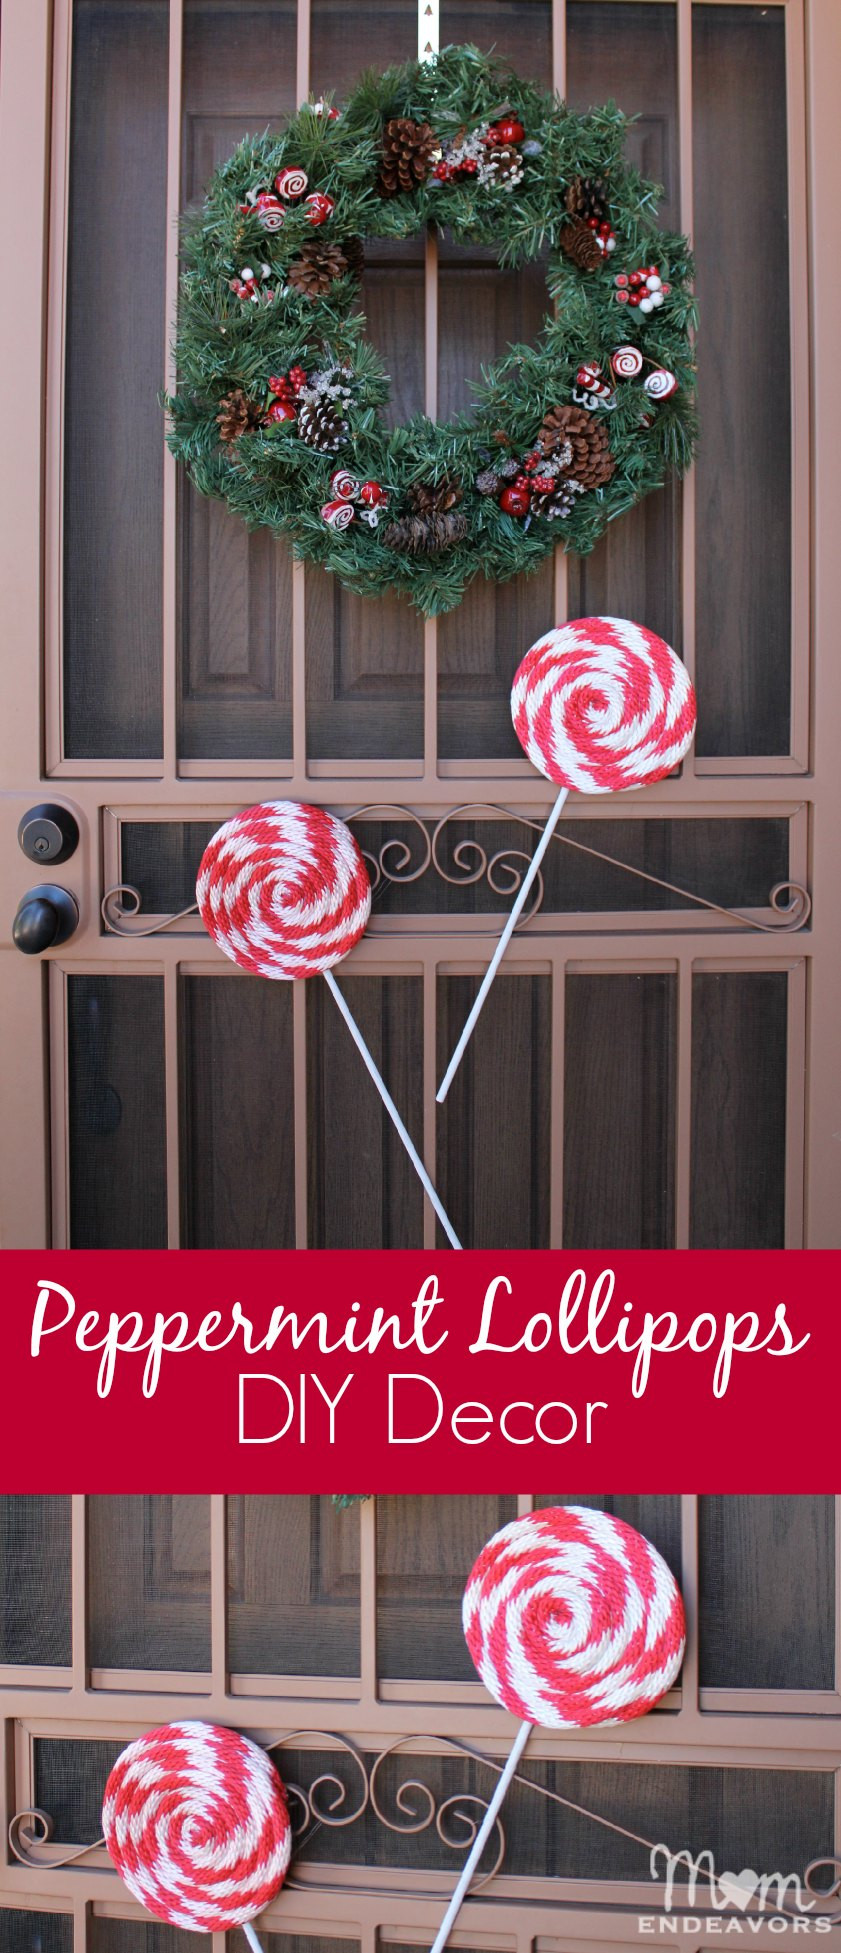 Best ideas about Christmas Decor DIY
. Save or Pin DIY Peppermint Lollipops Christmas Decor Now.